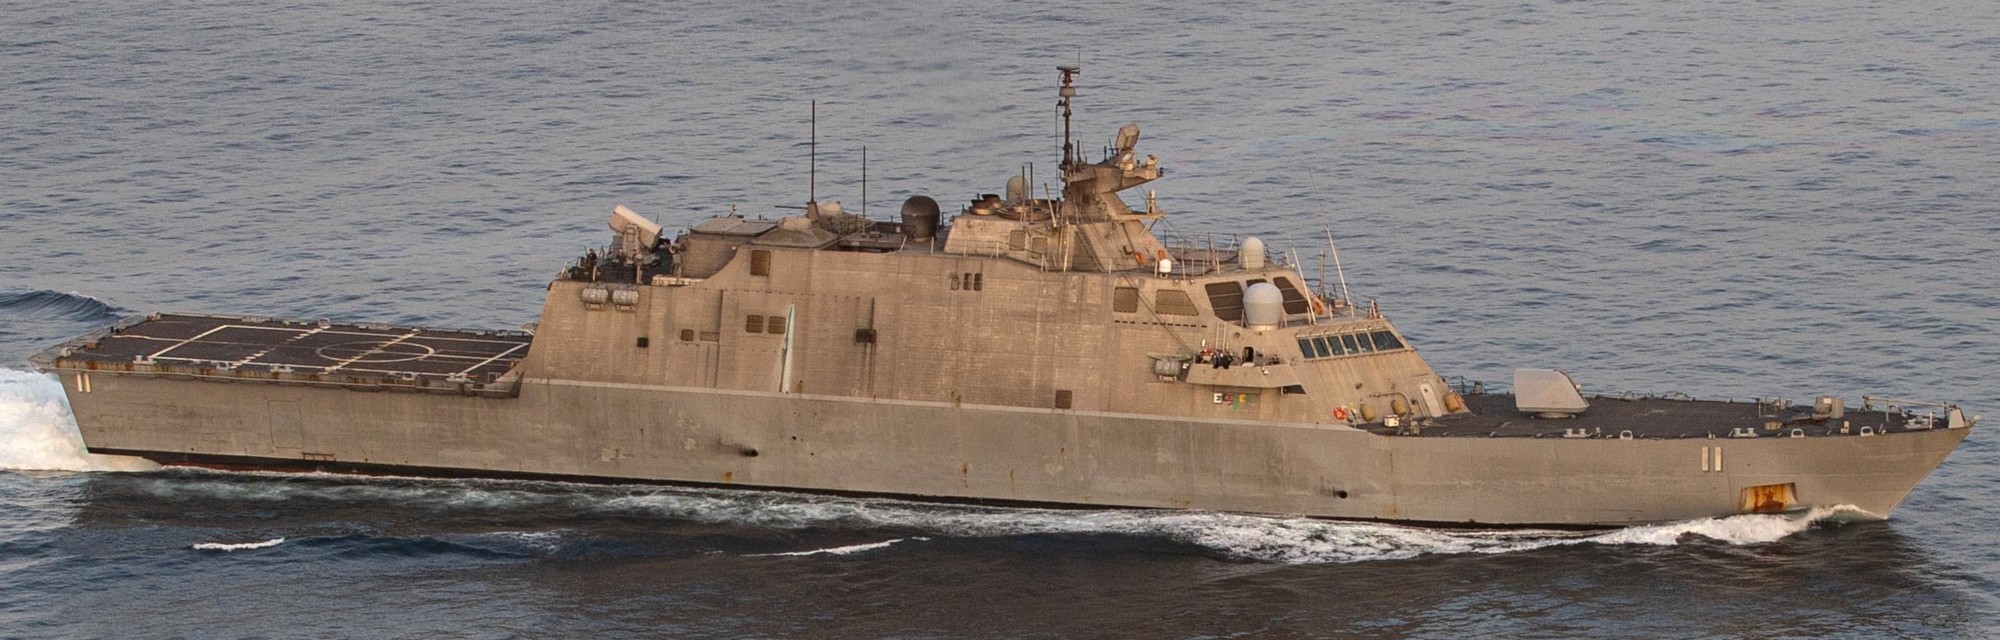 lcs-11 uss sioux city freedom class littoral combat ship us navy strait of hormuz 98